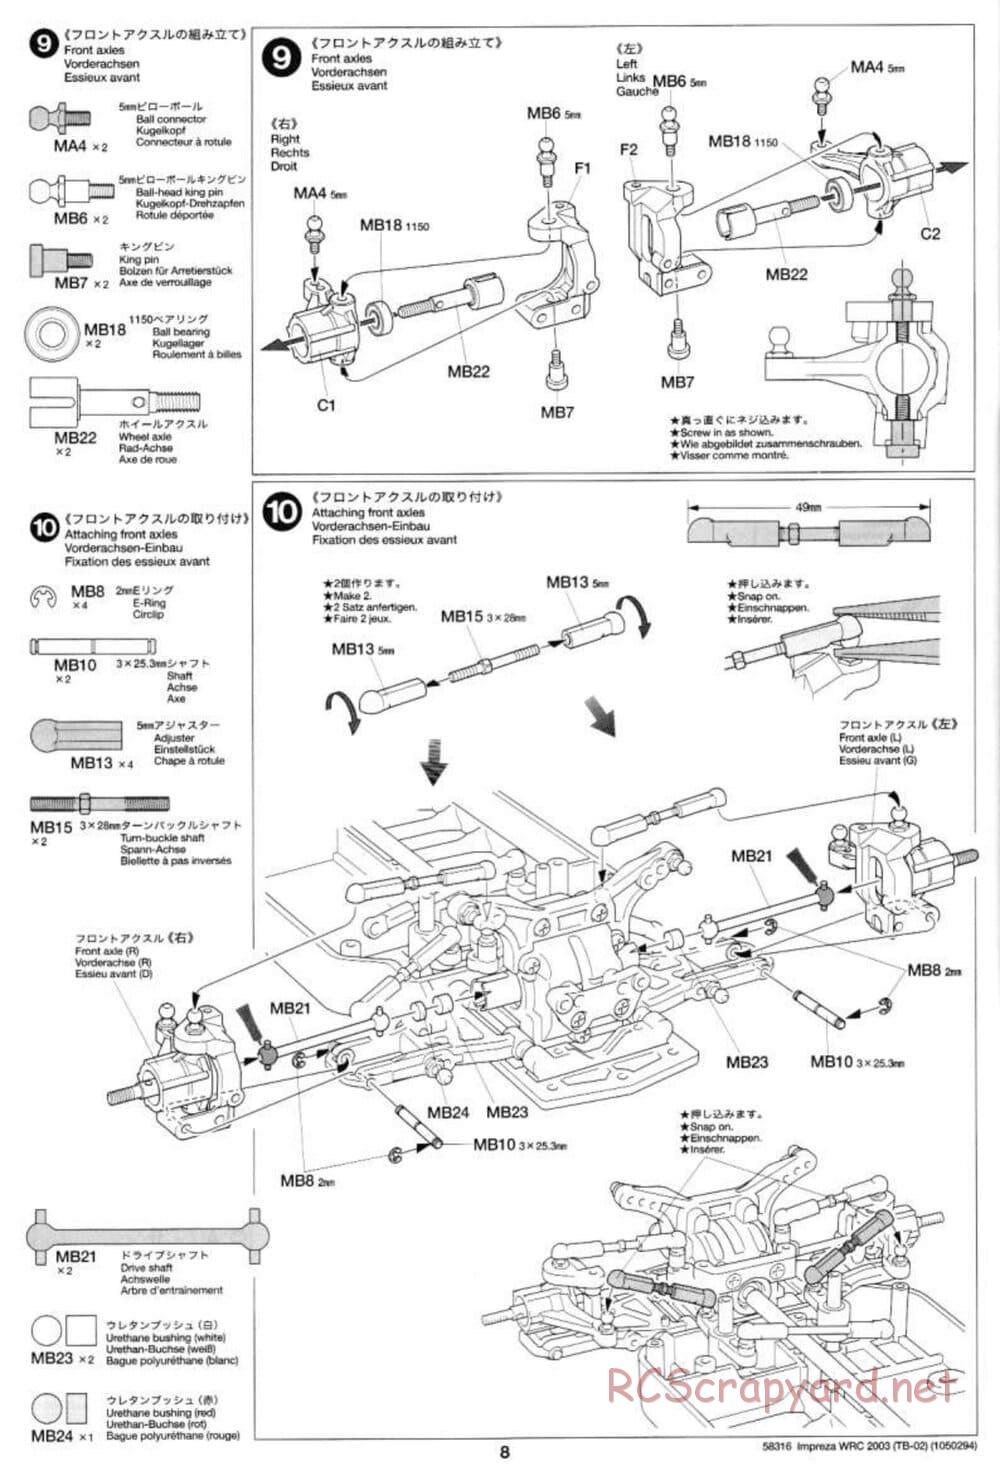 Tamiya - Subaru Impreza WRC 2003 - TB-02 Chassis - Manual - Page 8